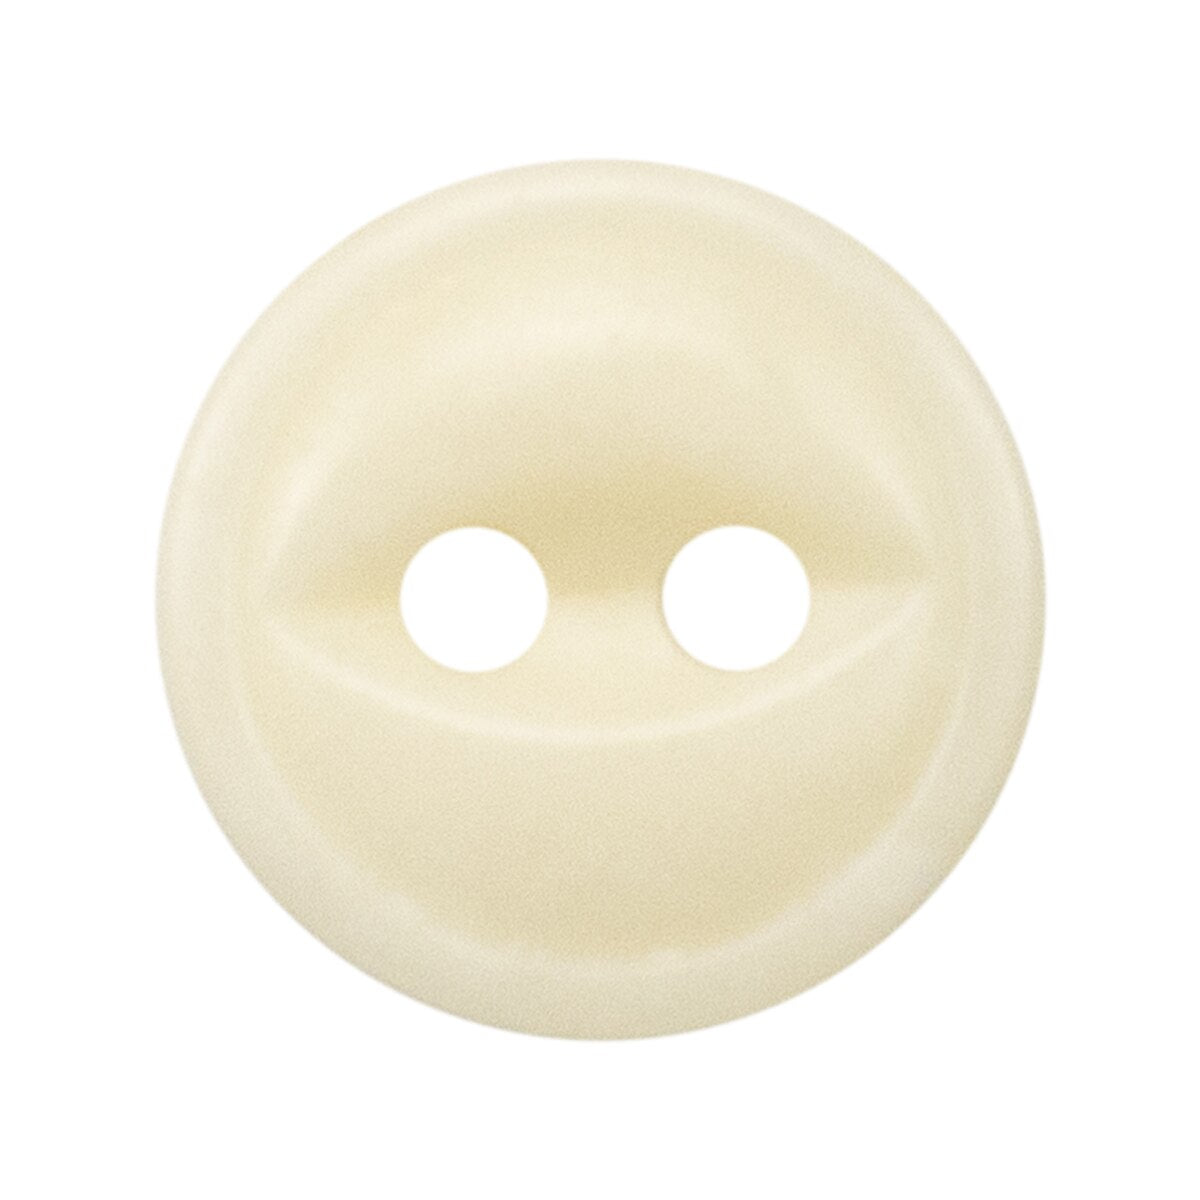 5pcs/lot 11.5mm Small White Bone Buttons